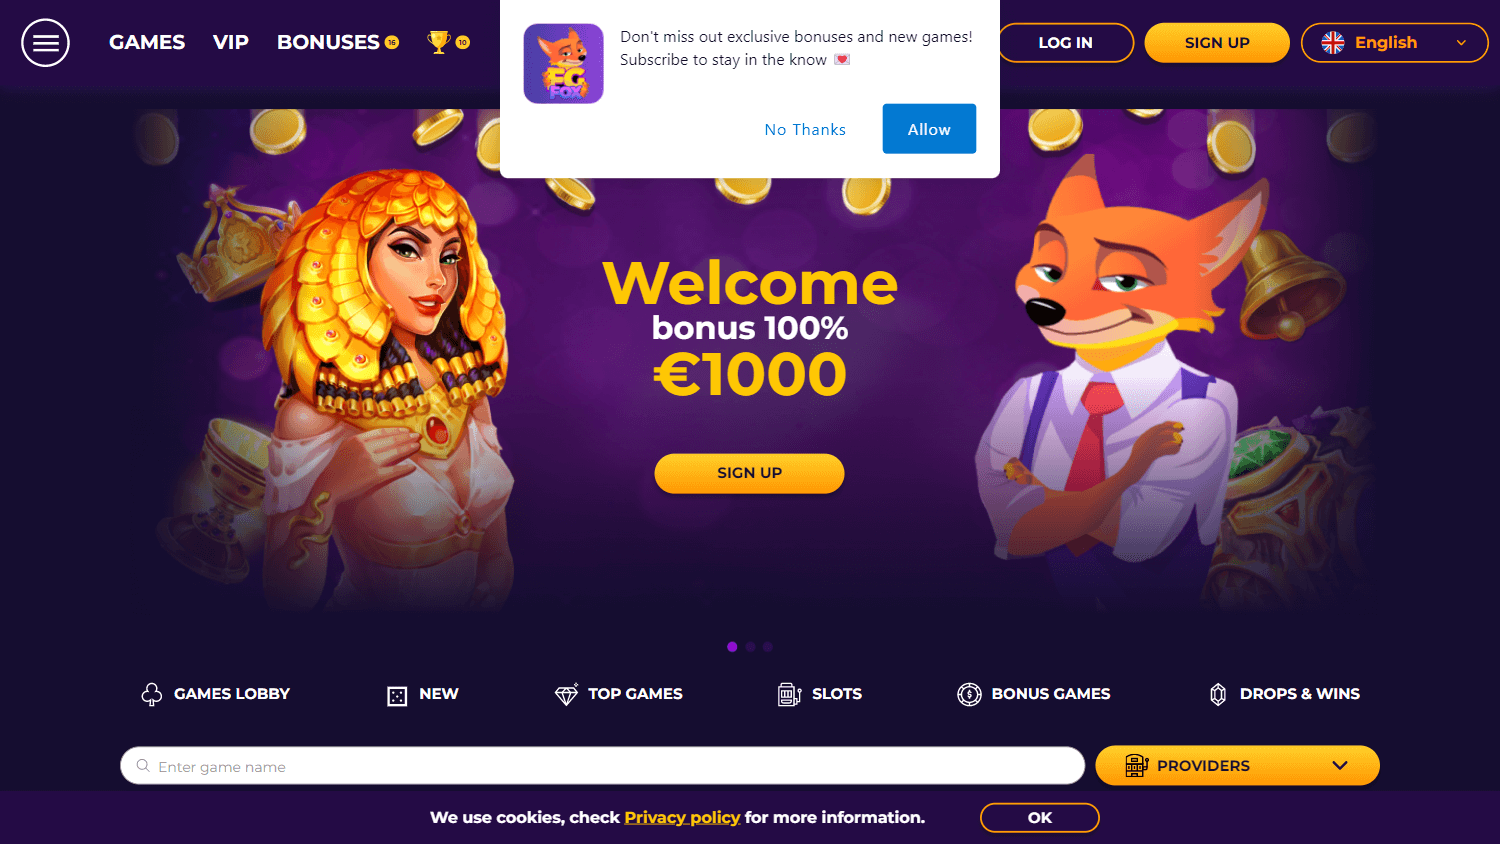 fgfox_casino_homepage_desktop